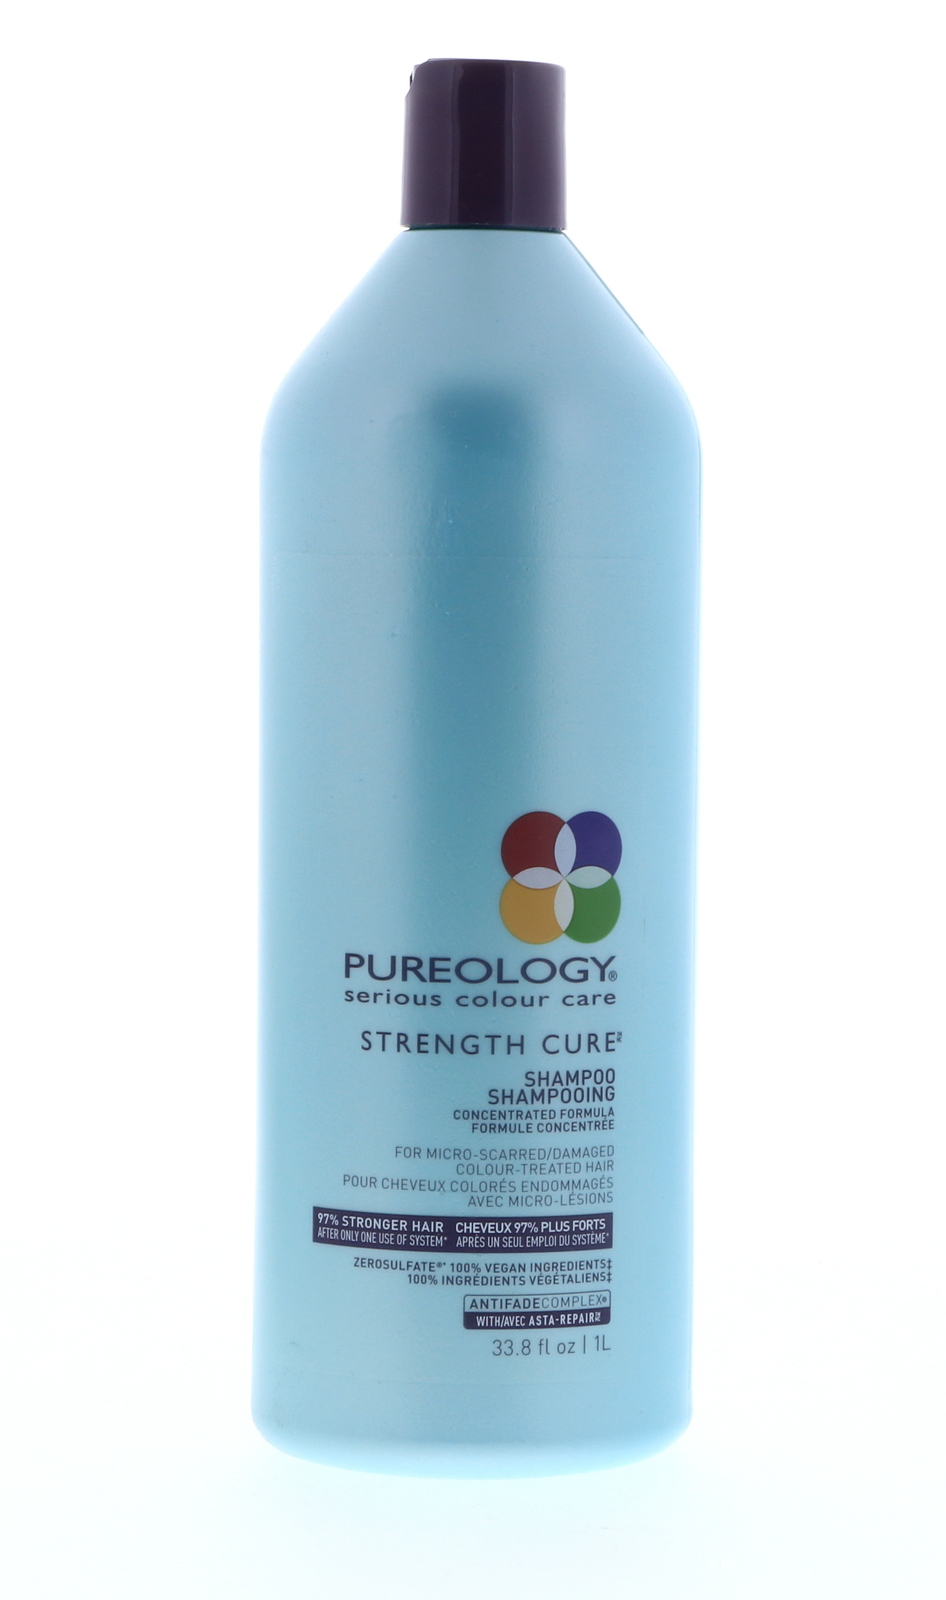 Pureology Strength Cure Shampoo Liter - $106.32